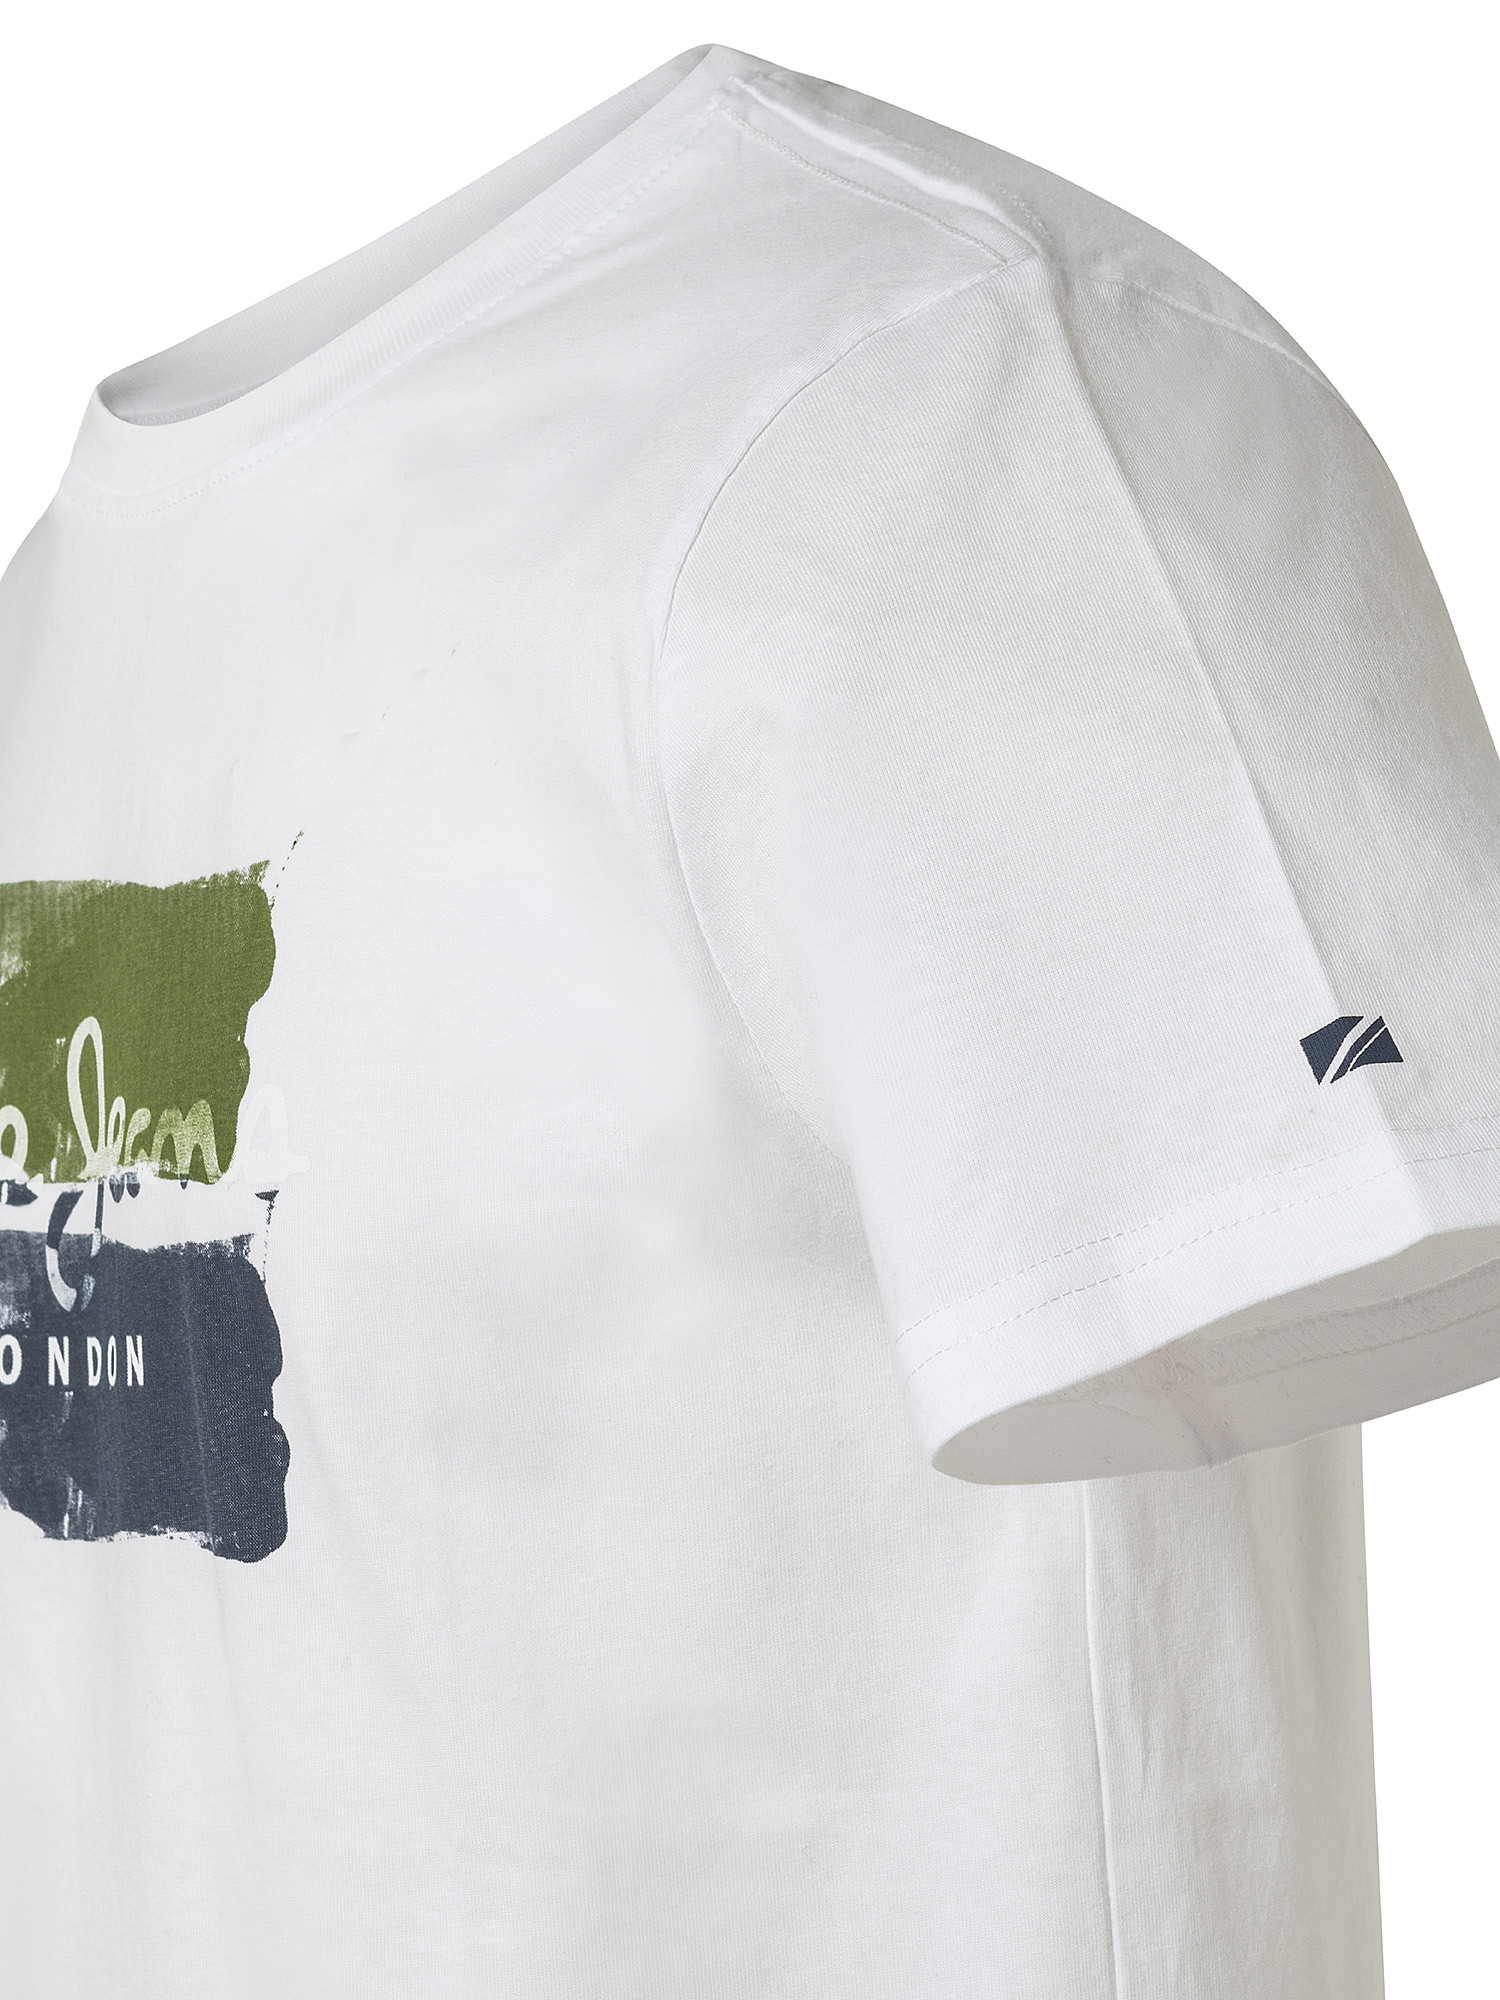 Santino cotton t-shirt, White, large image number 2